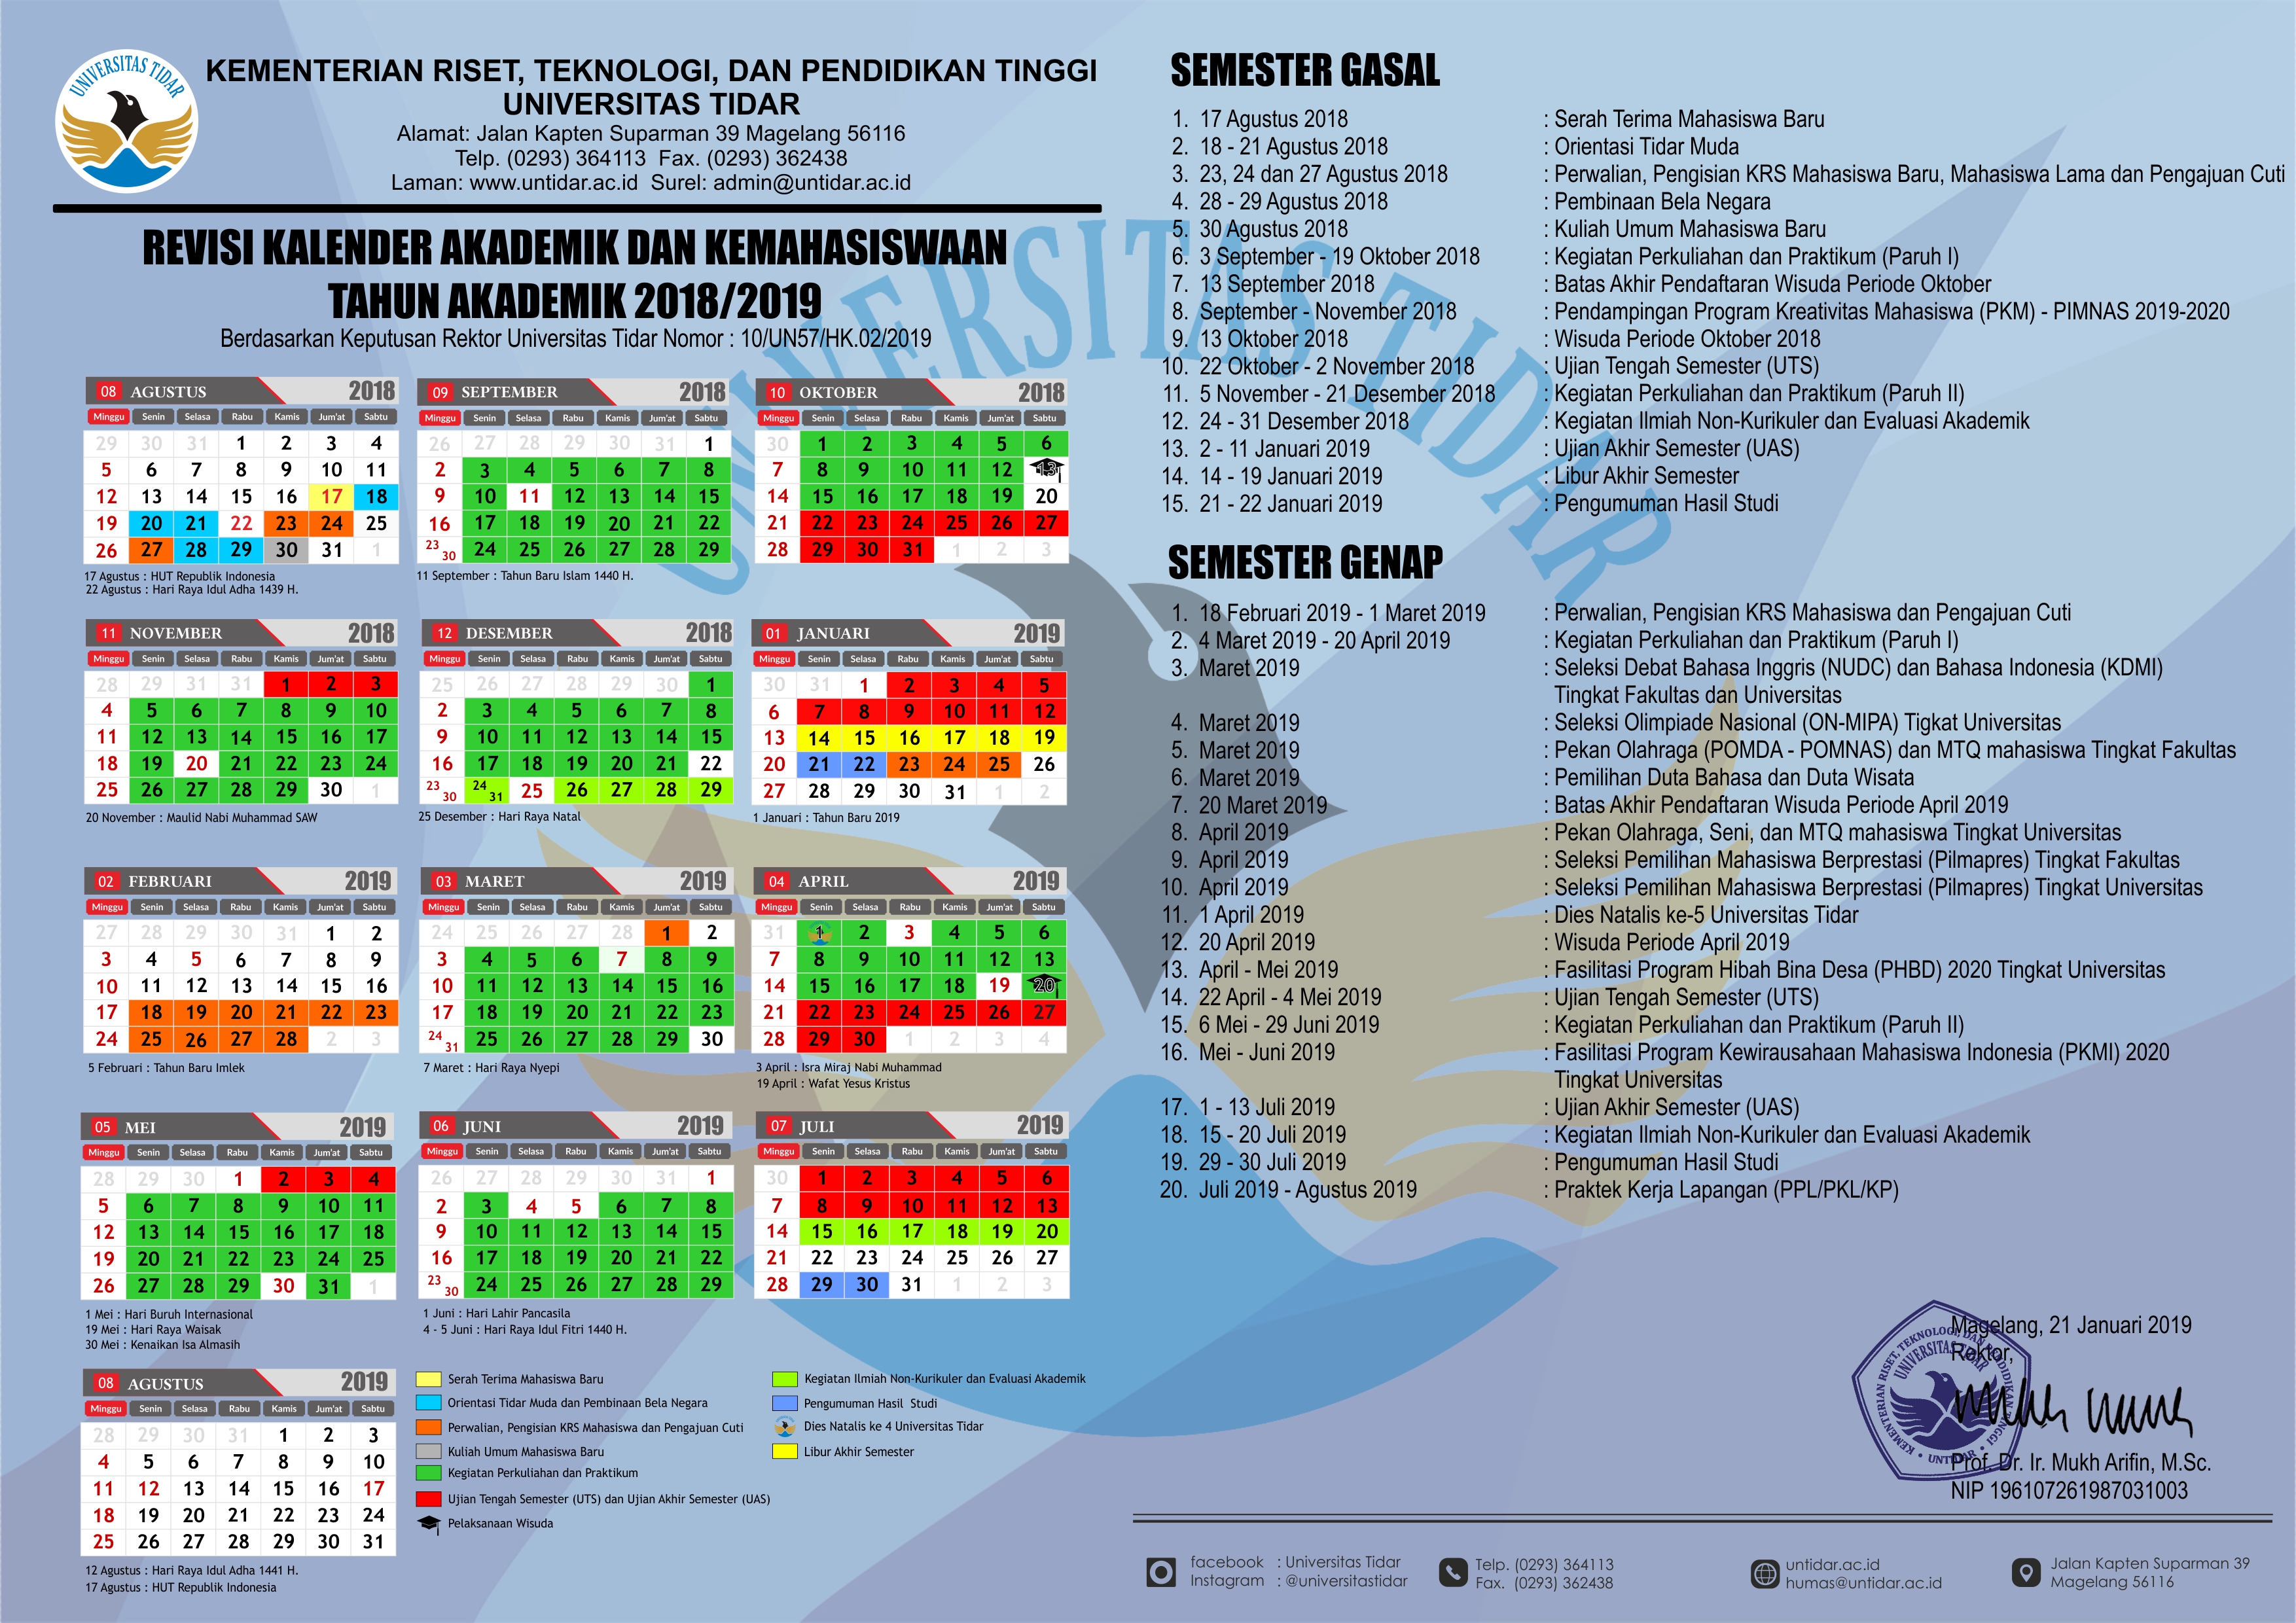 Revisi Kalender Akademik 2019 final